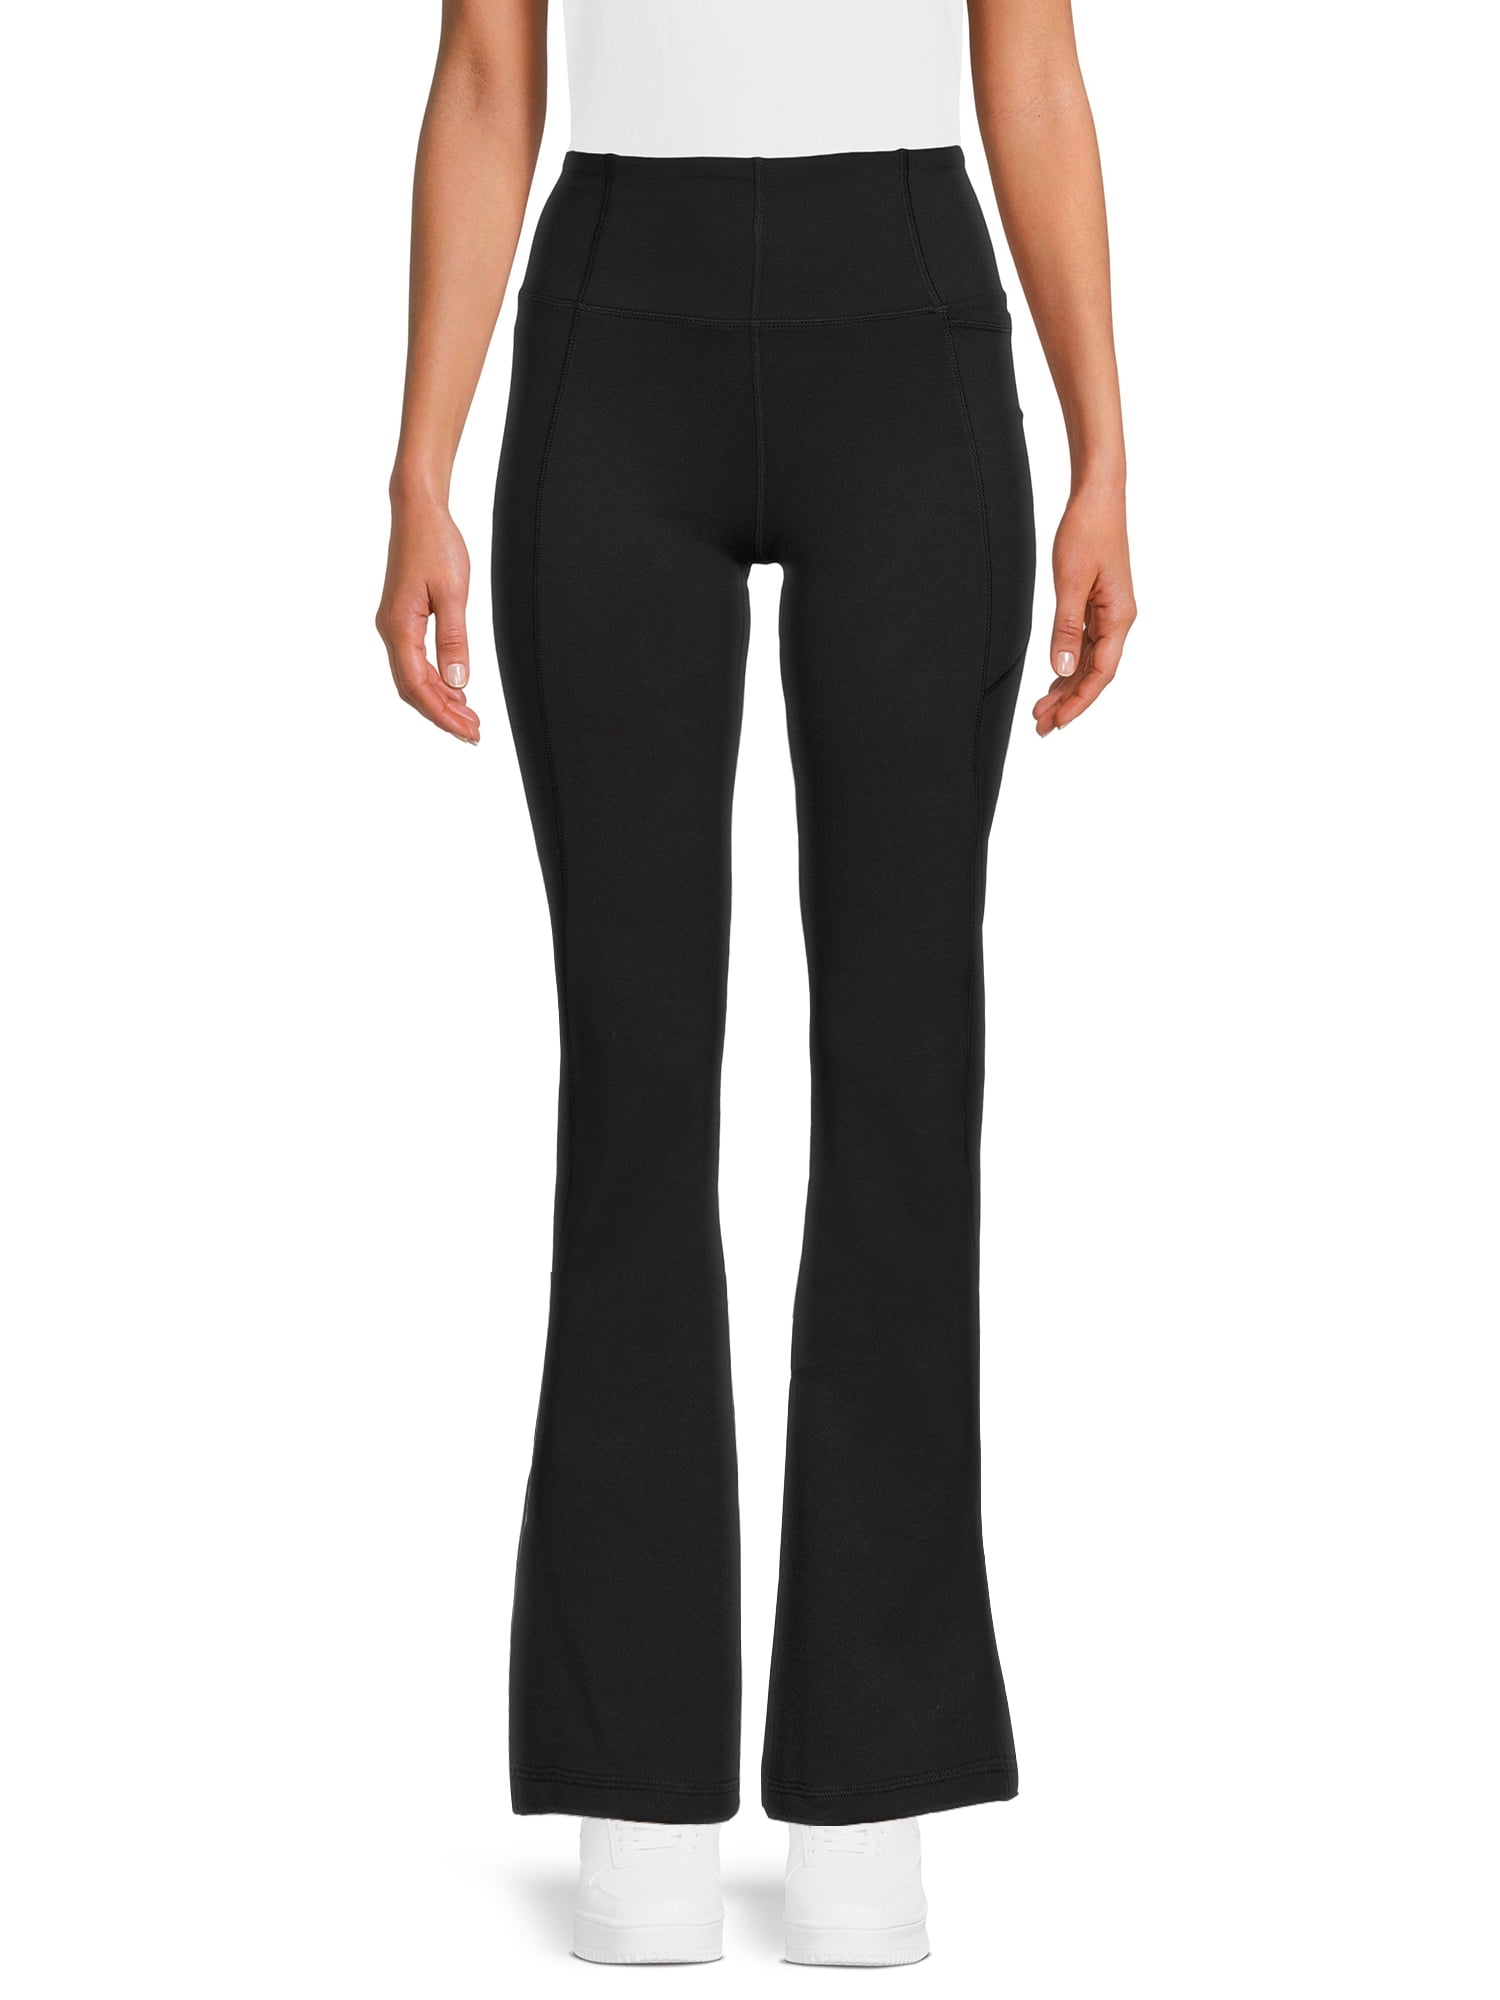 Avia Women's Flare Pants, Sizes XS-XXXL - Walmart.com